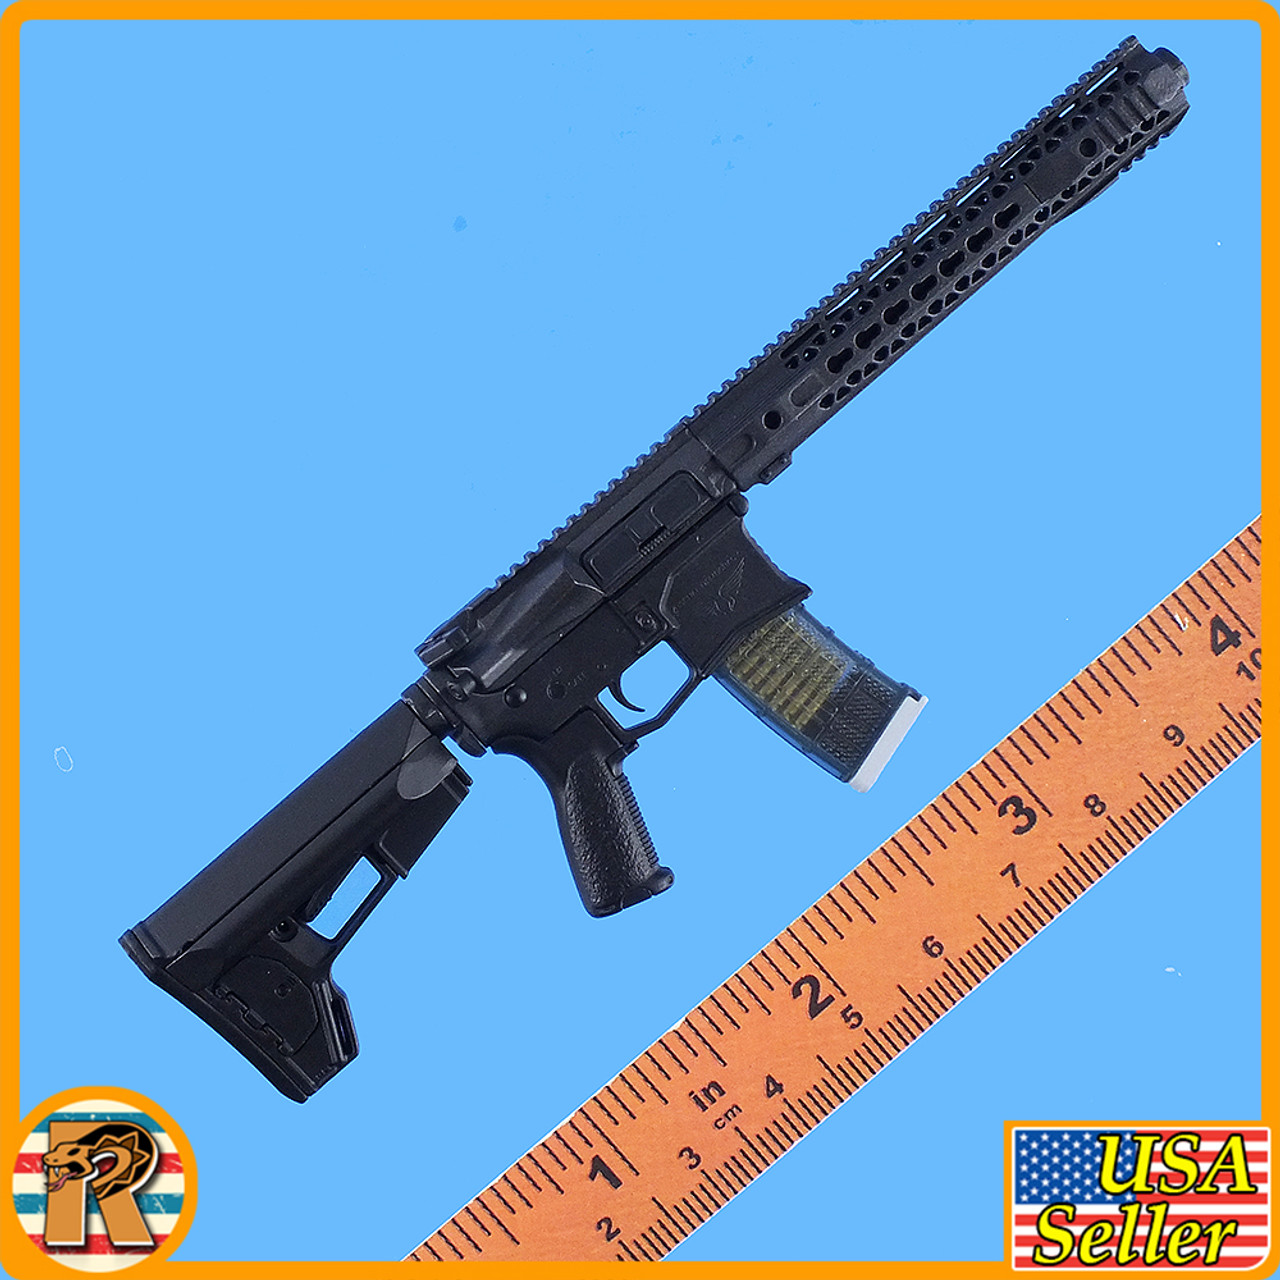 Snow Field Gear - AR15 Rifle Set #1 - 1/6 Scale -